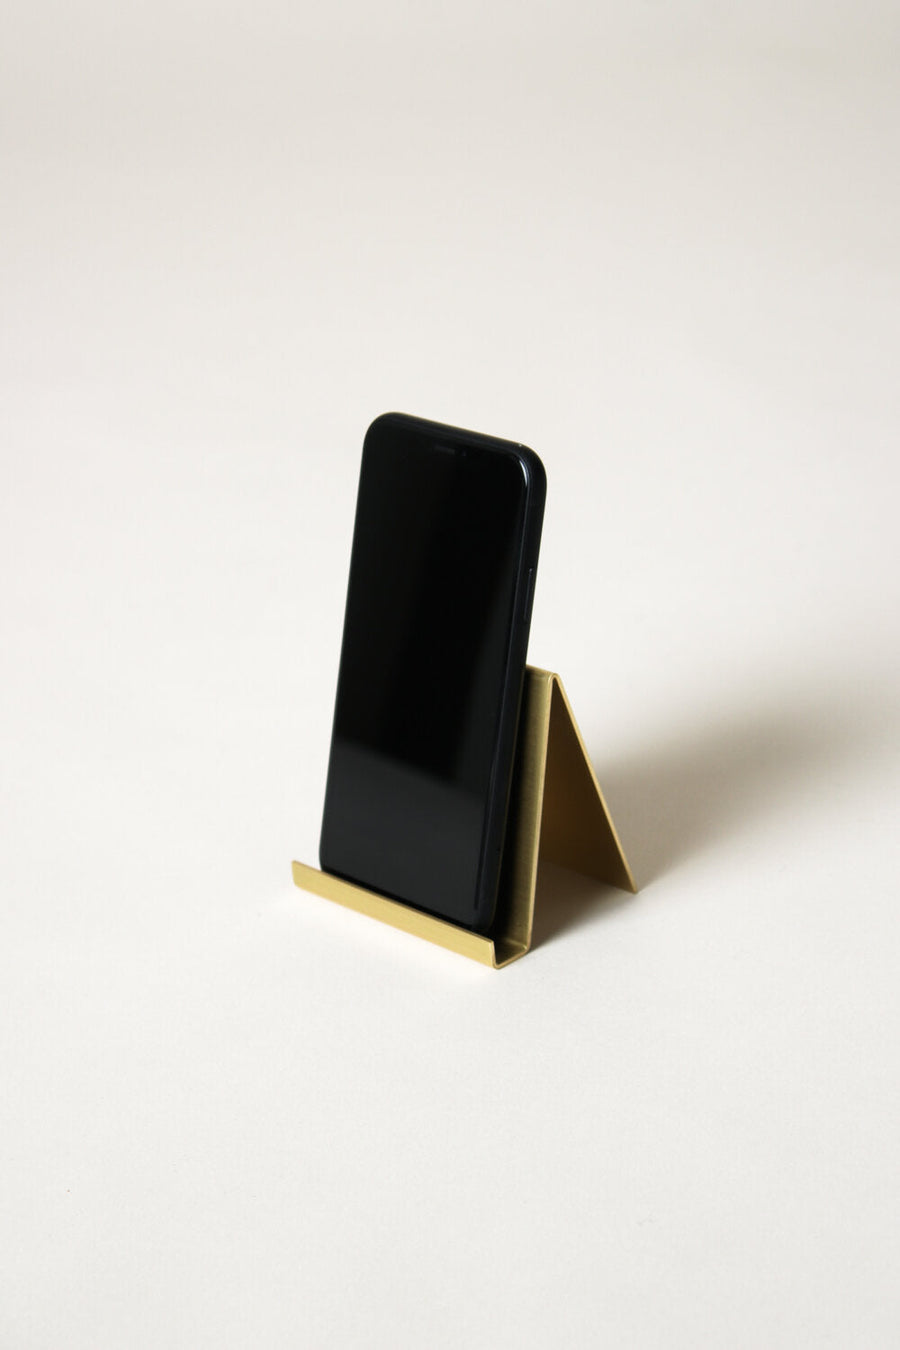 Crease Phone Holder Sample - Blackened Brass